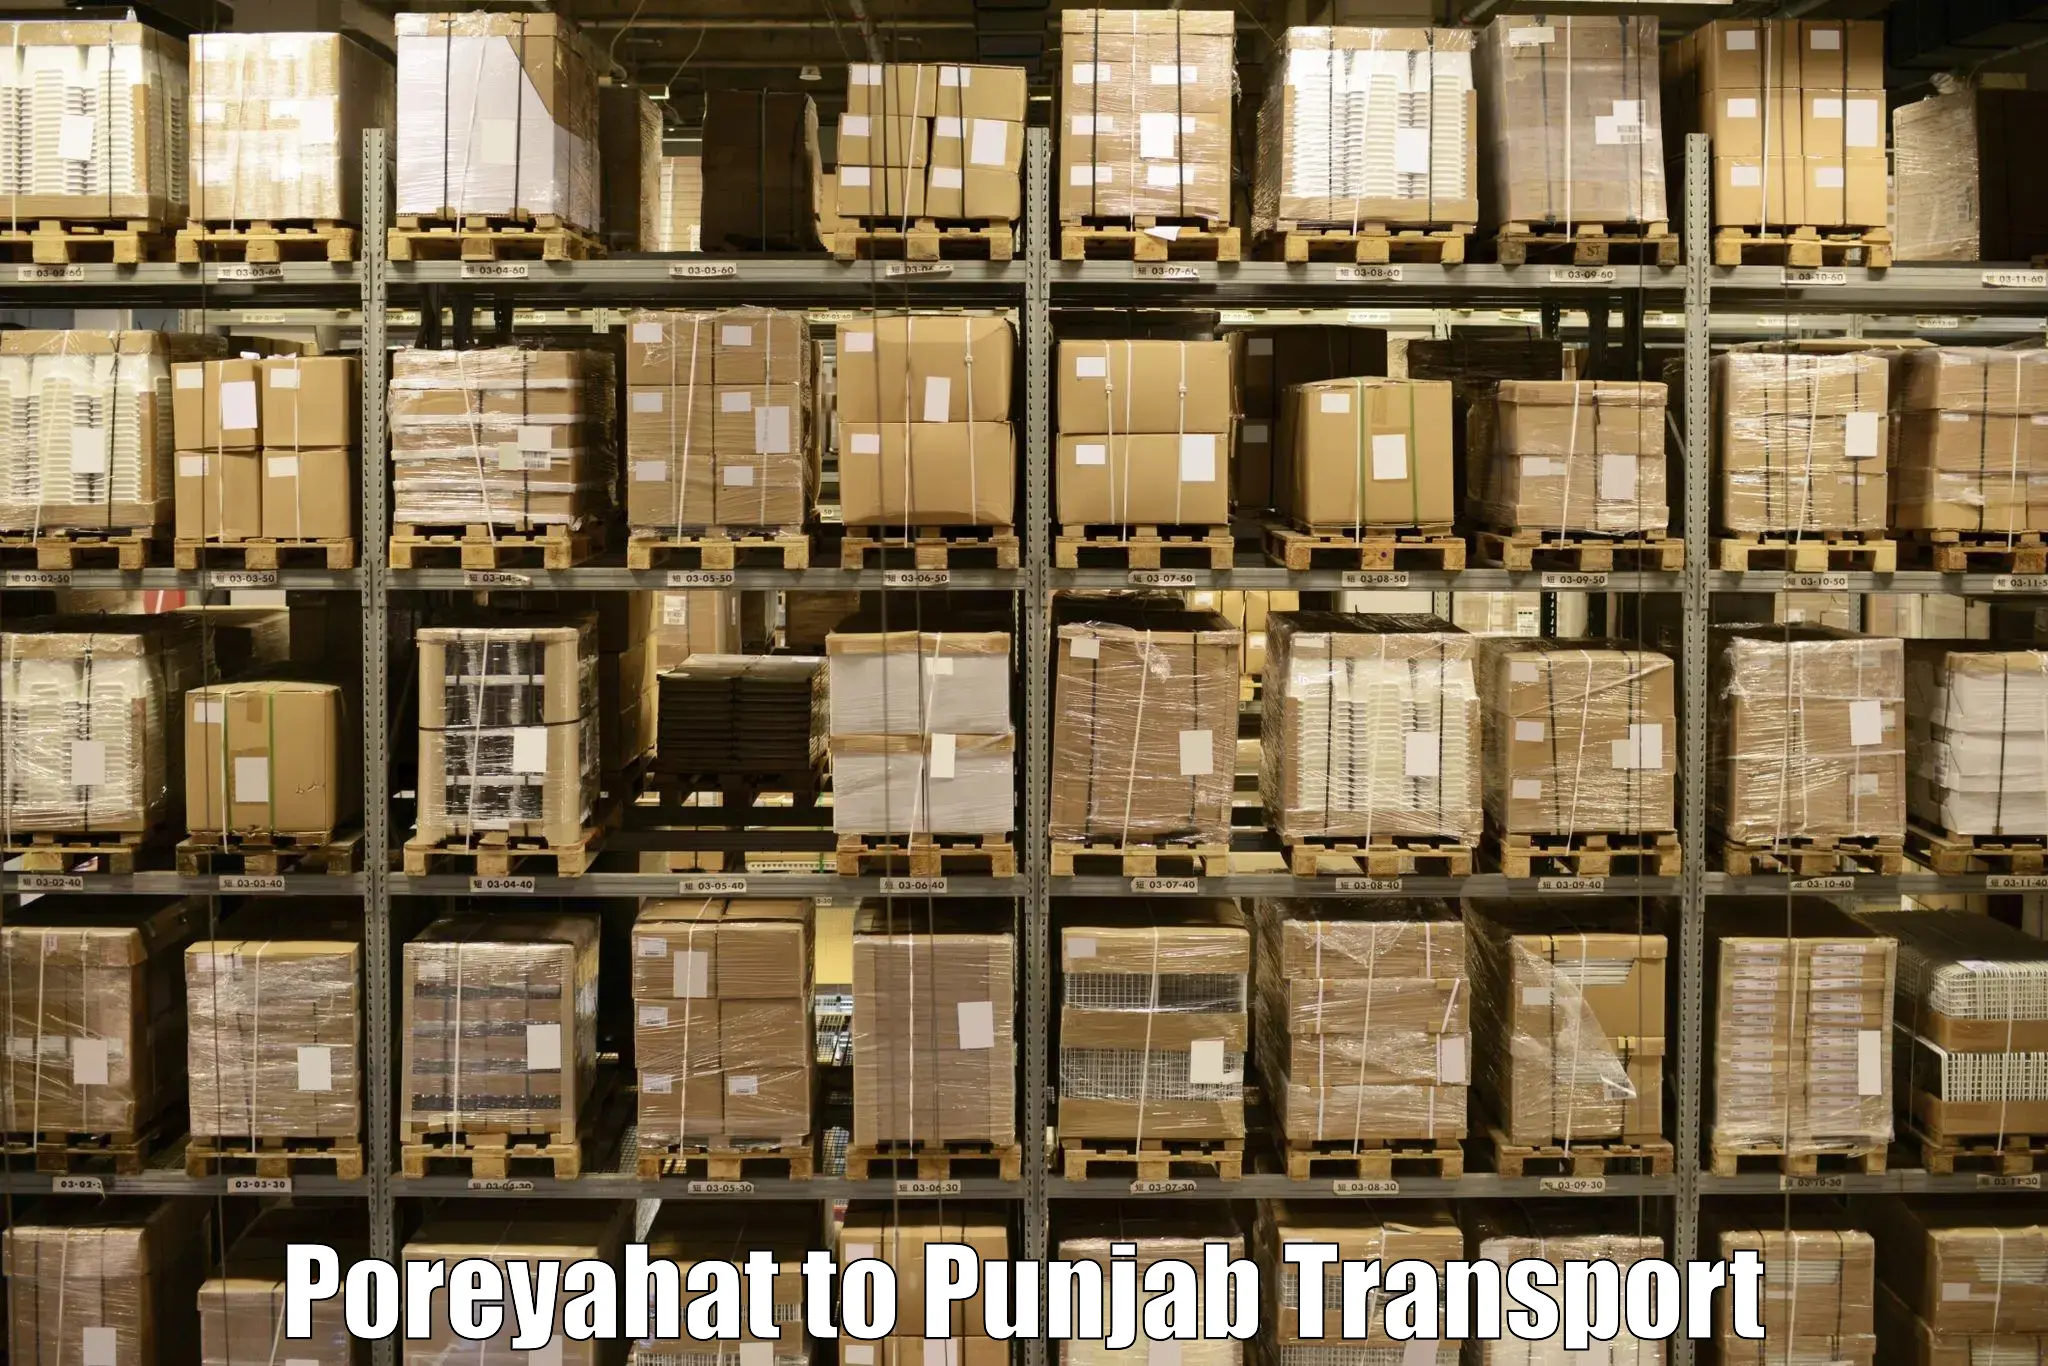 Transport in sharing Poreyahat to Anandpur Sahib